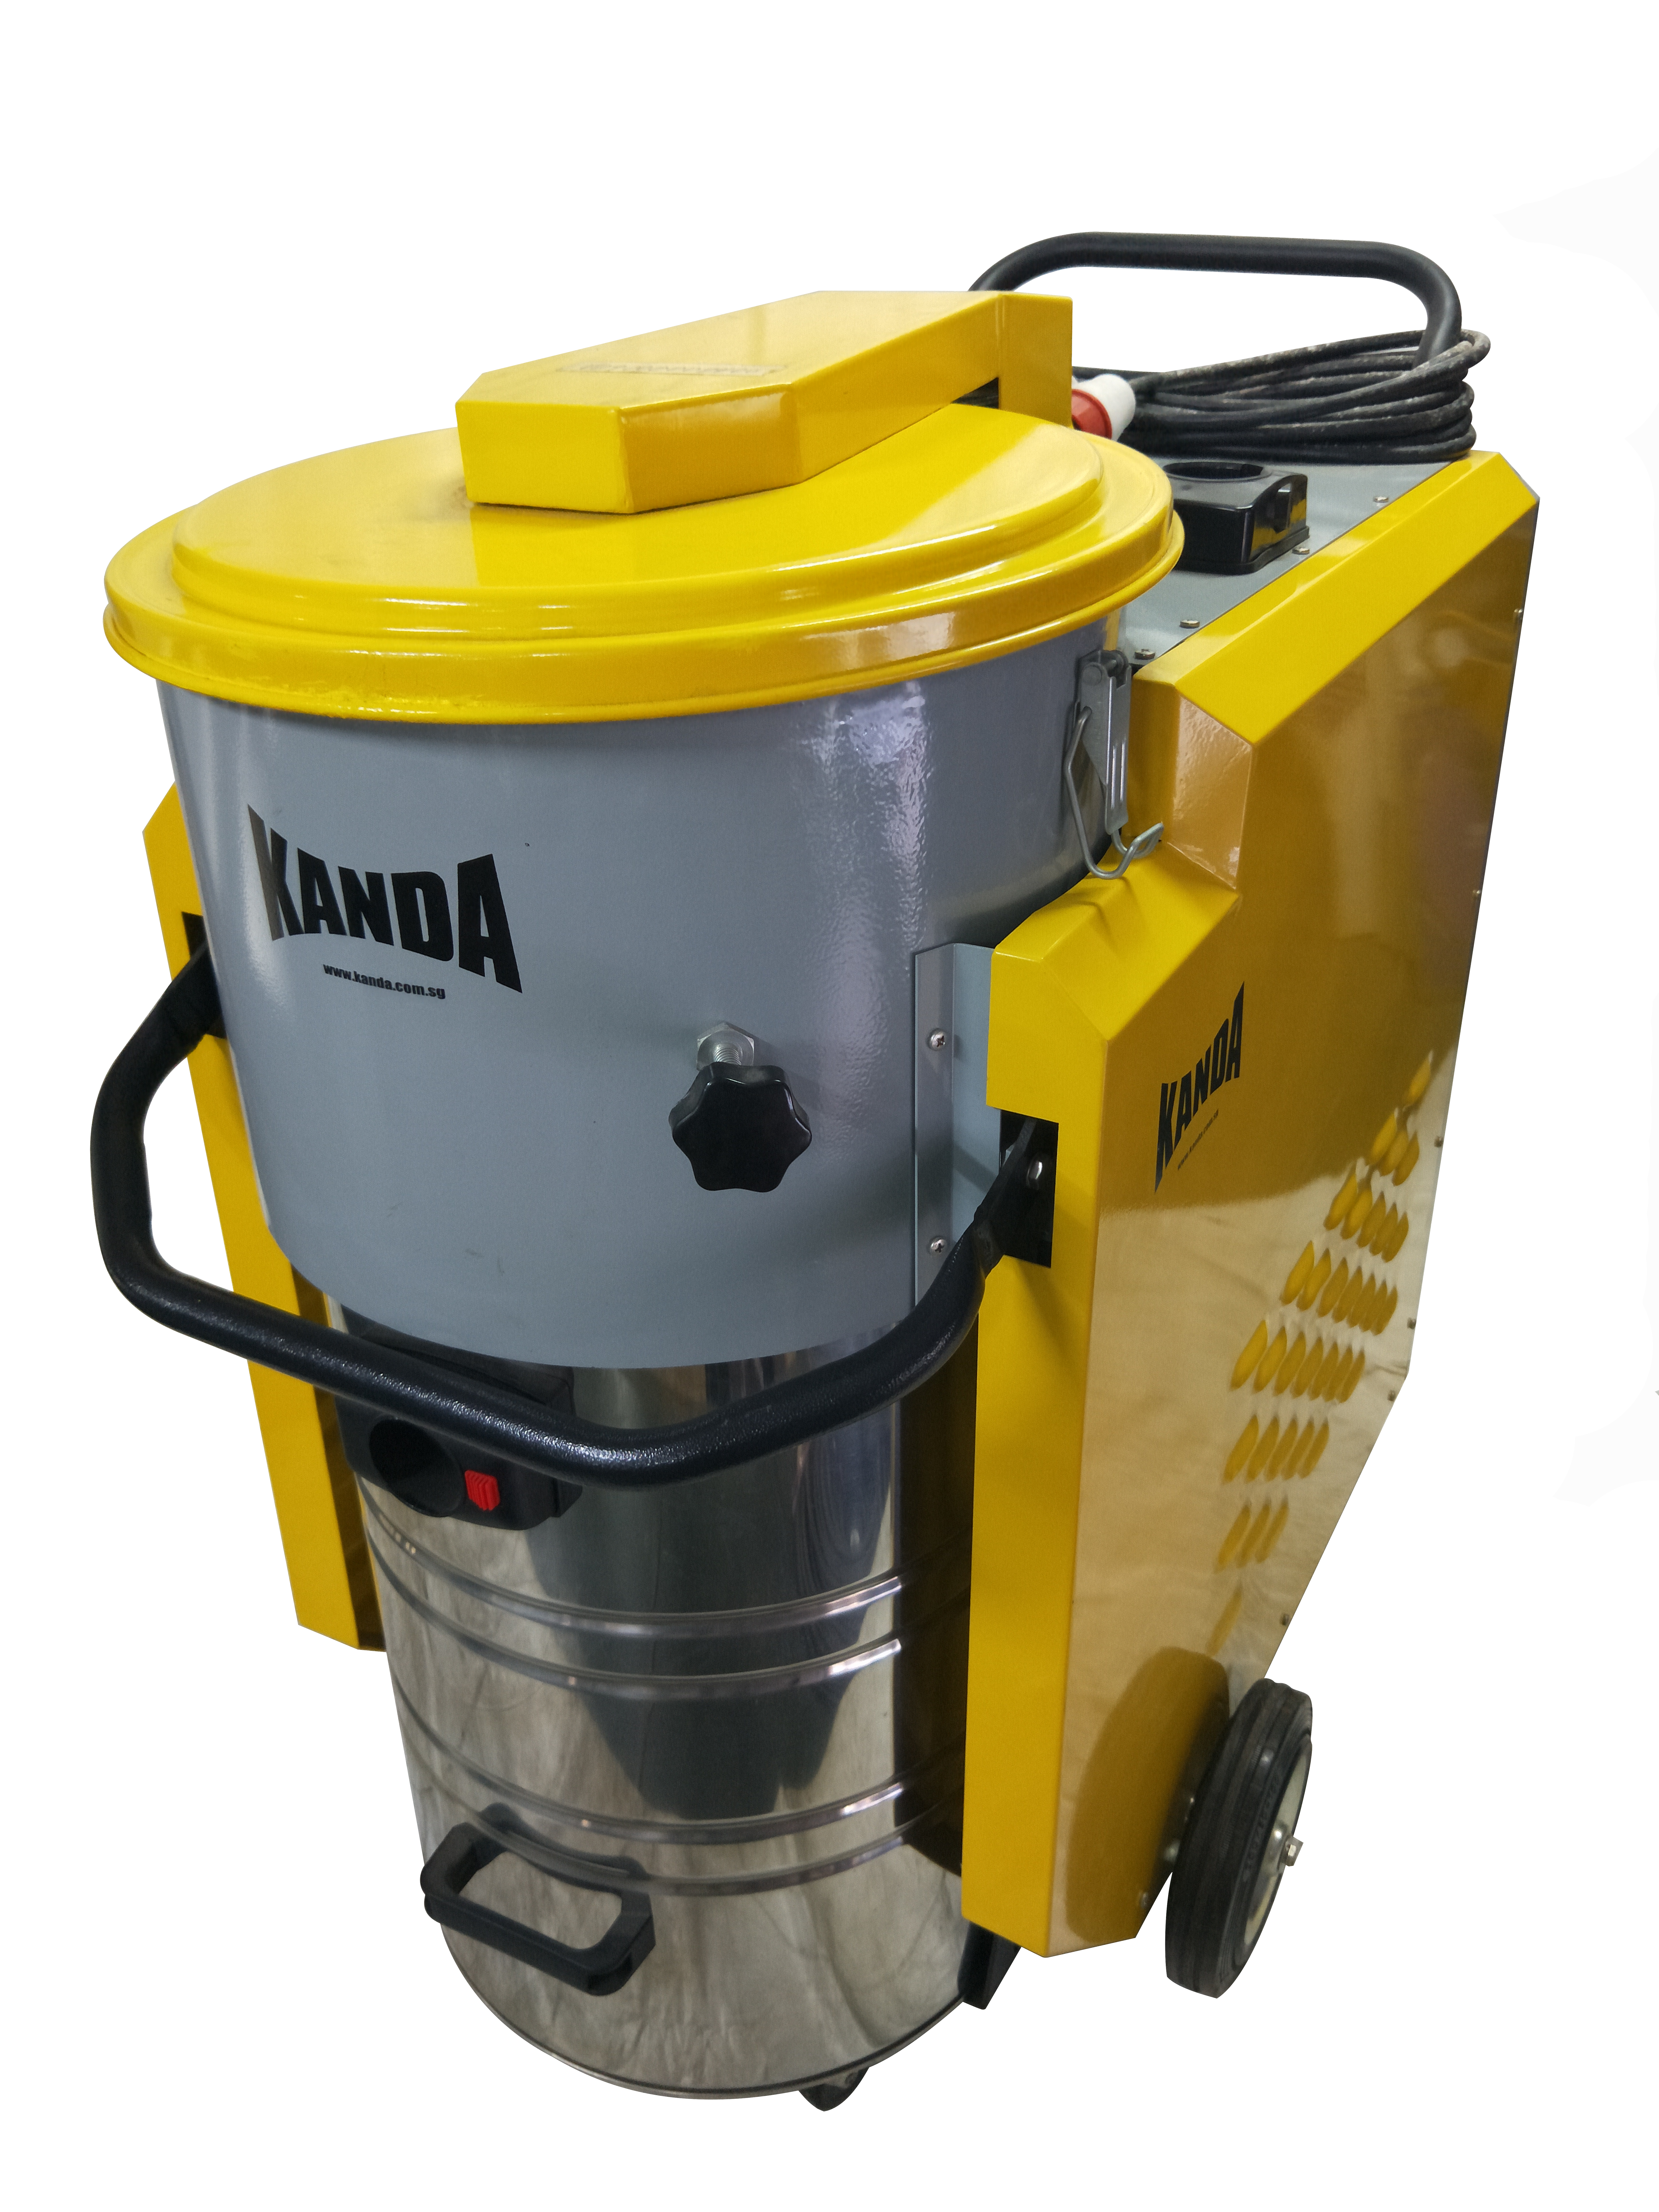 Industrial Dry Vacuum Cleaner - KANDA KIVC3